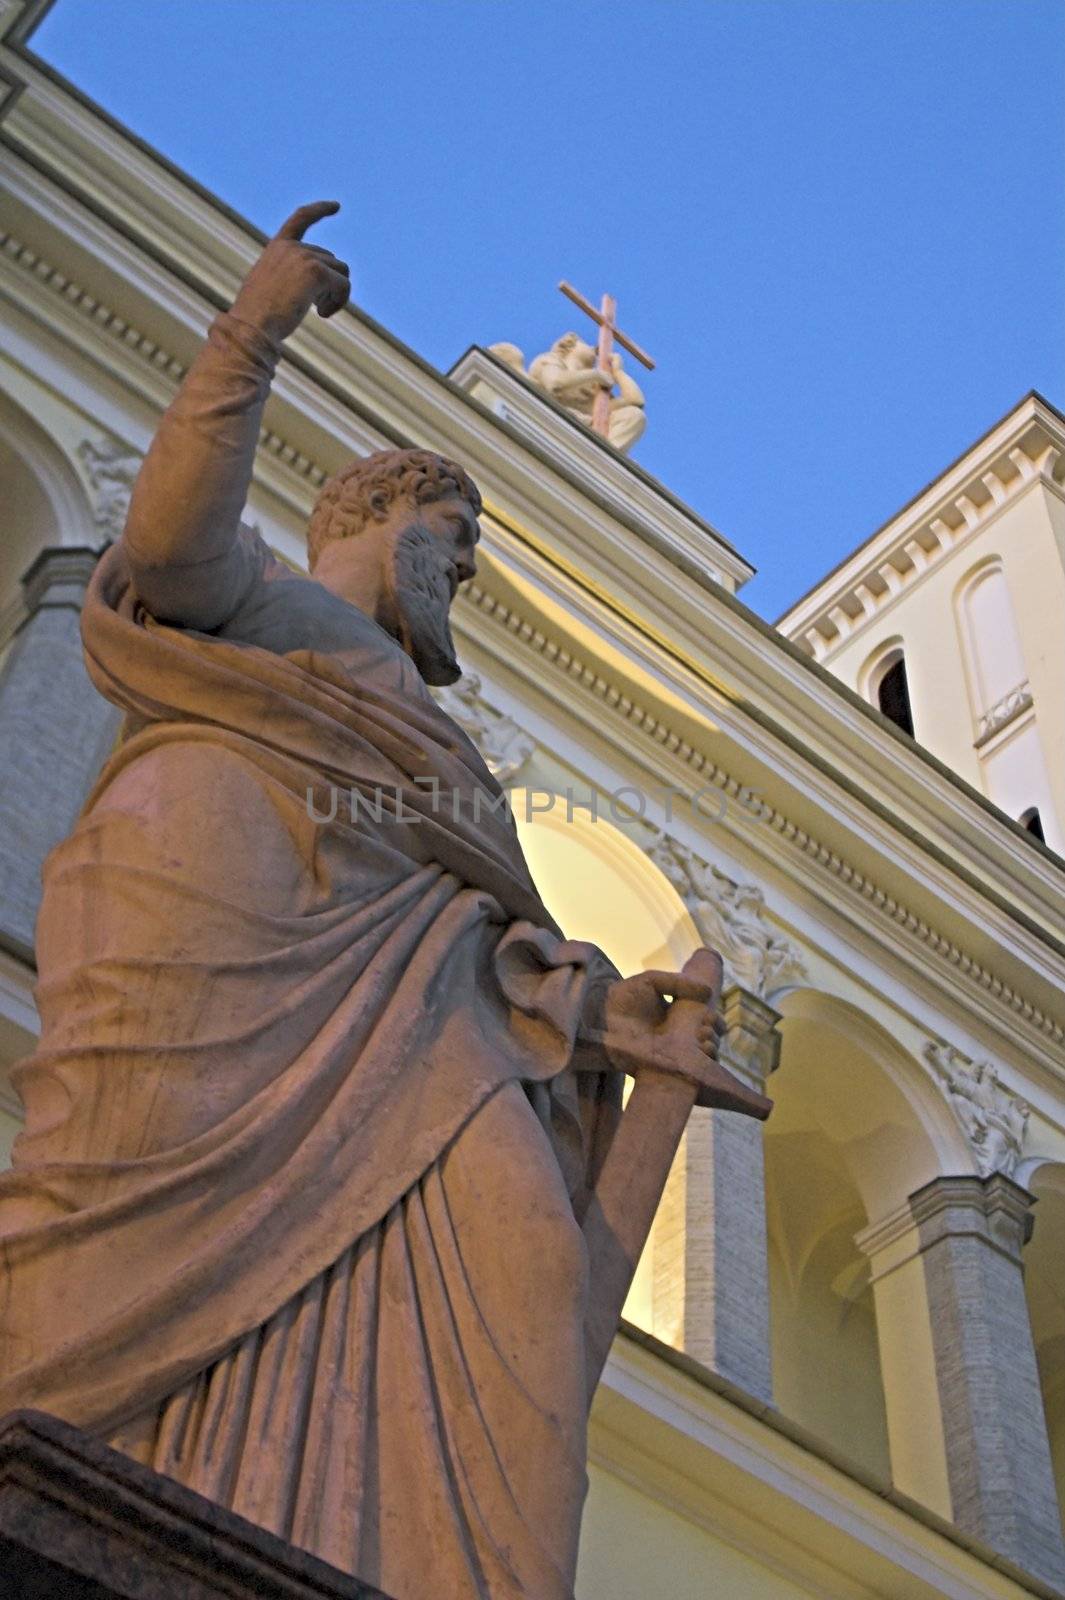 Saint Peter's Sculpture by simfan